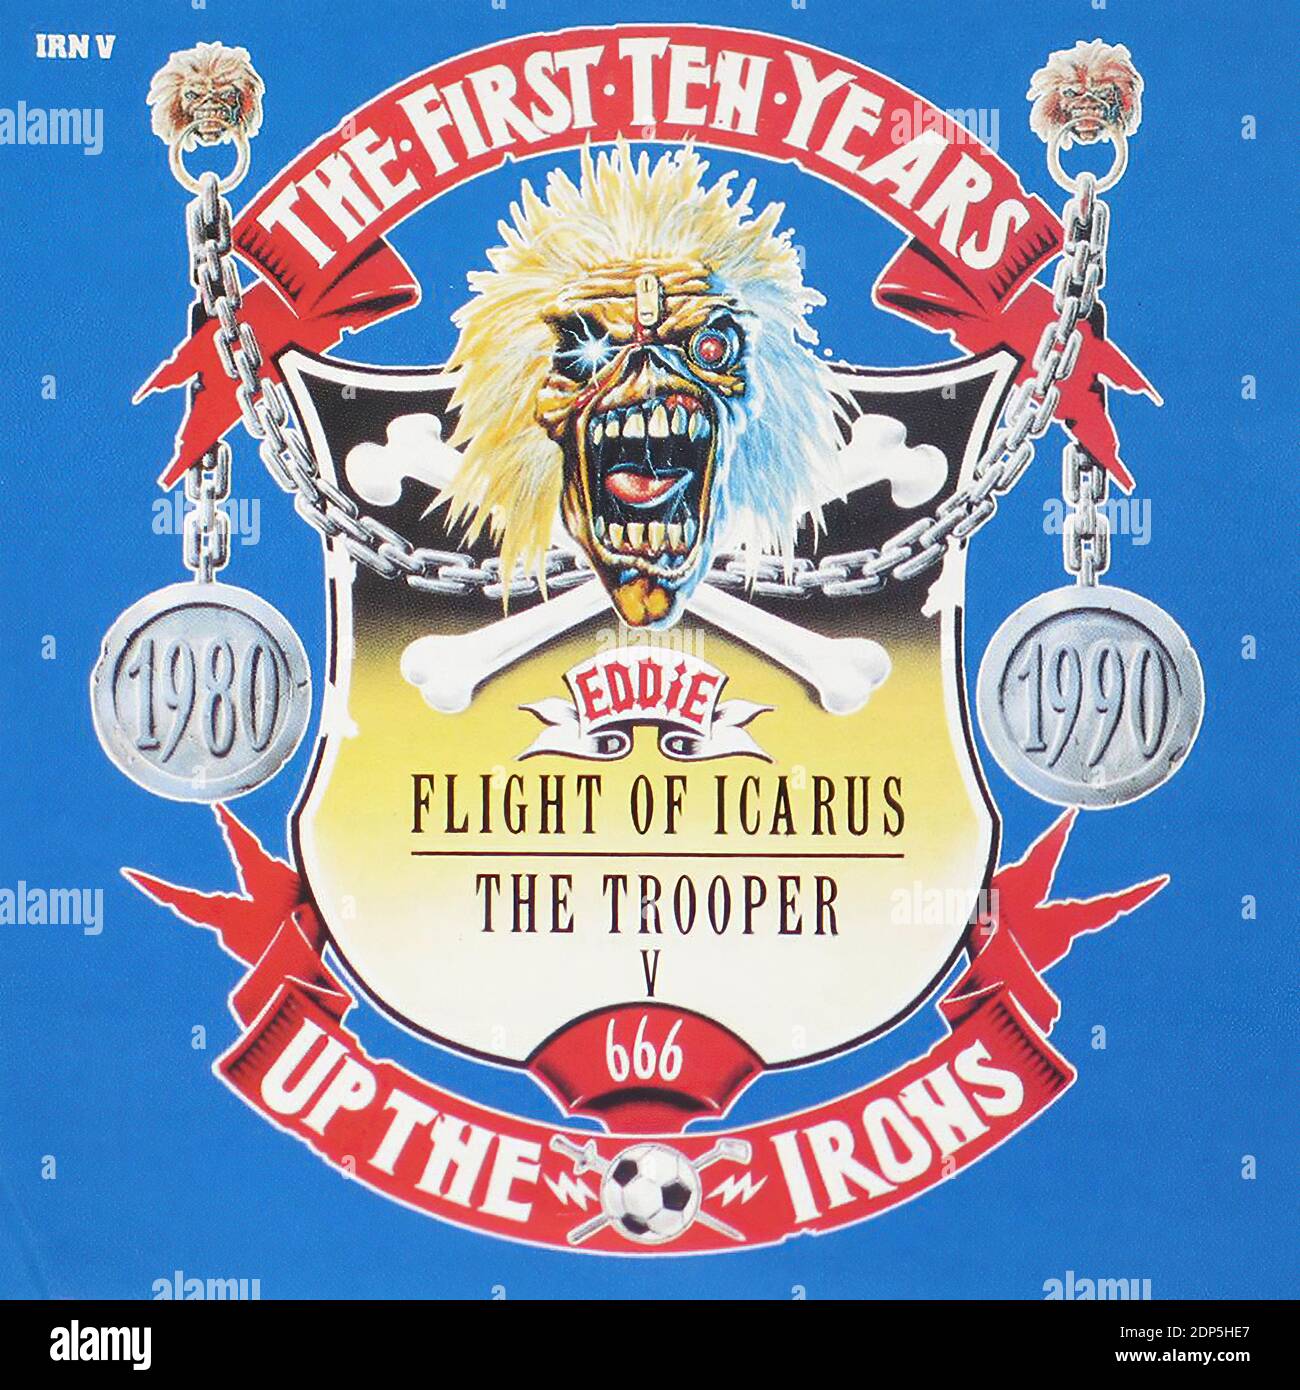 Iron Maiden Killers - Vintage vinyl album cover Stock Photo - Alamy